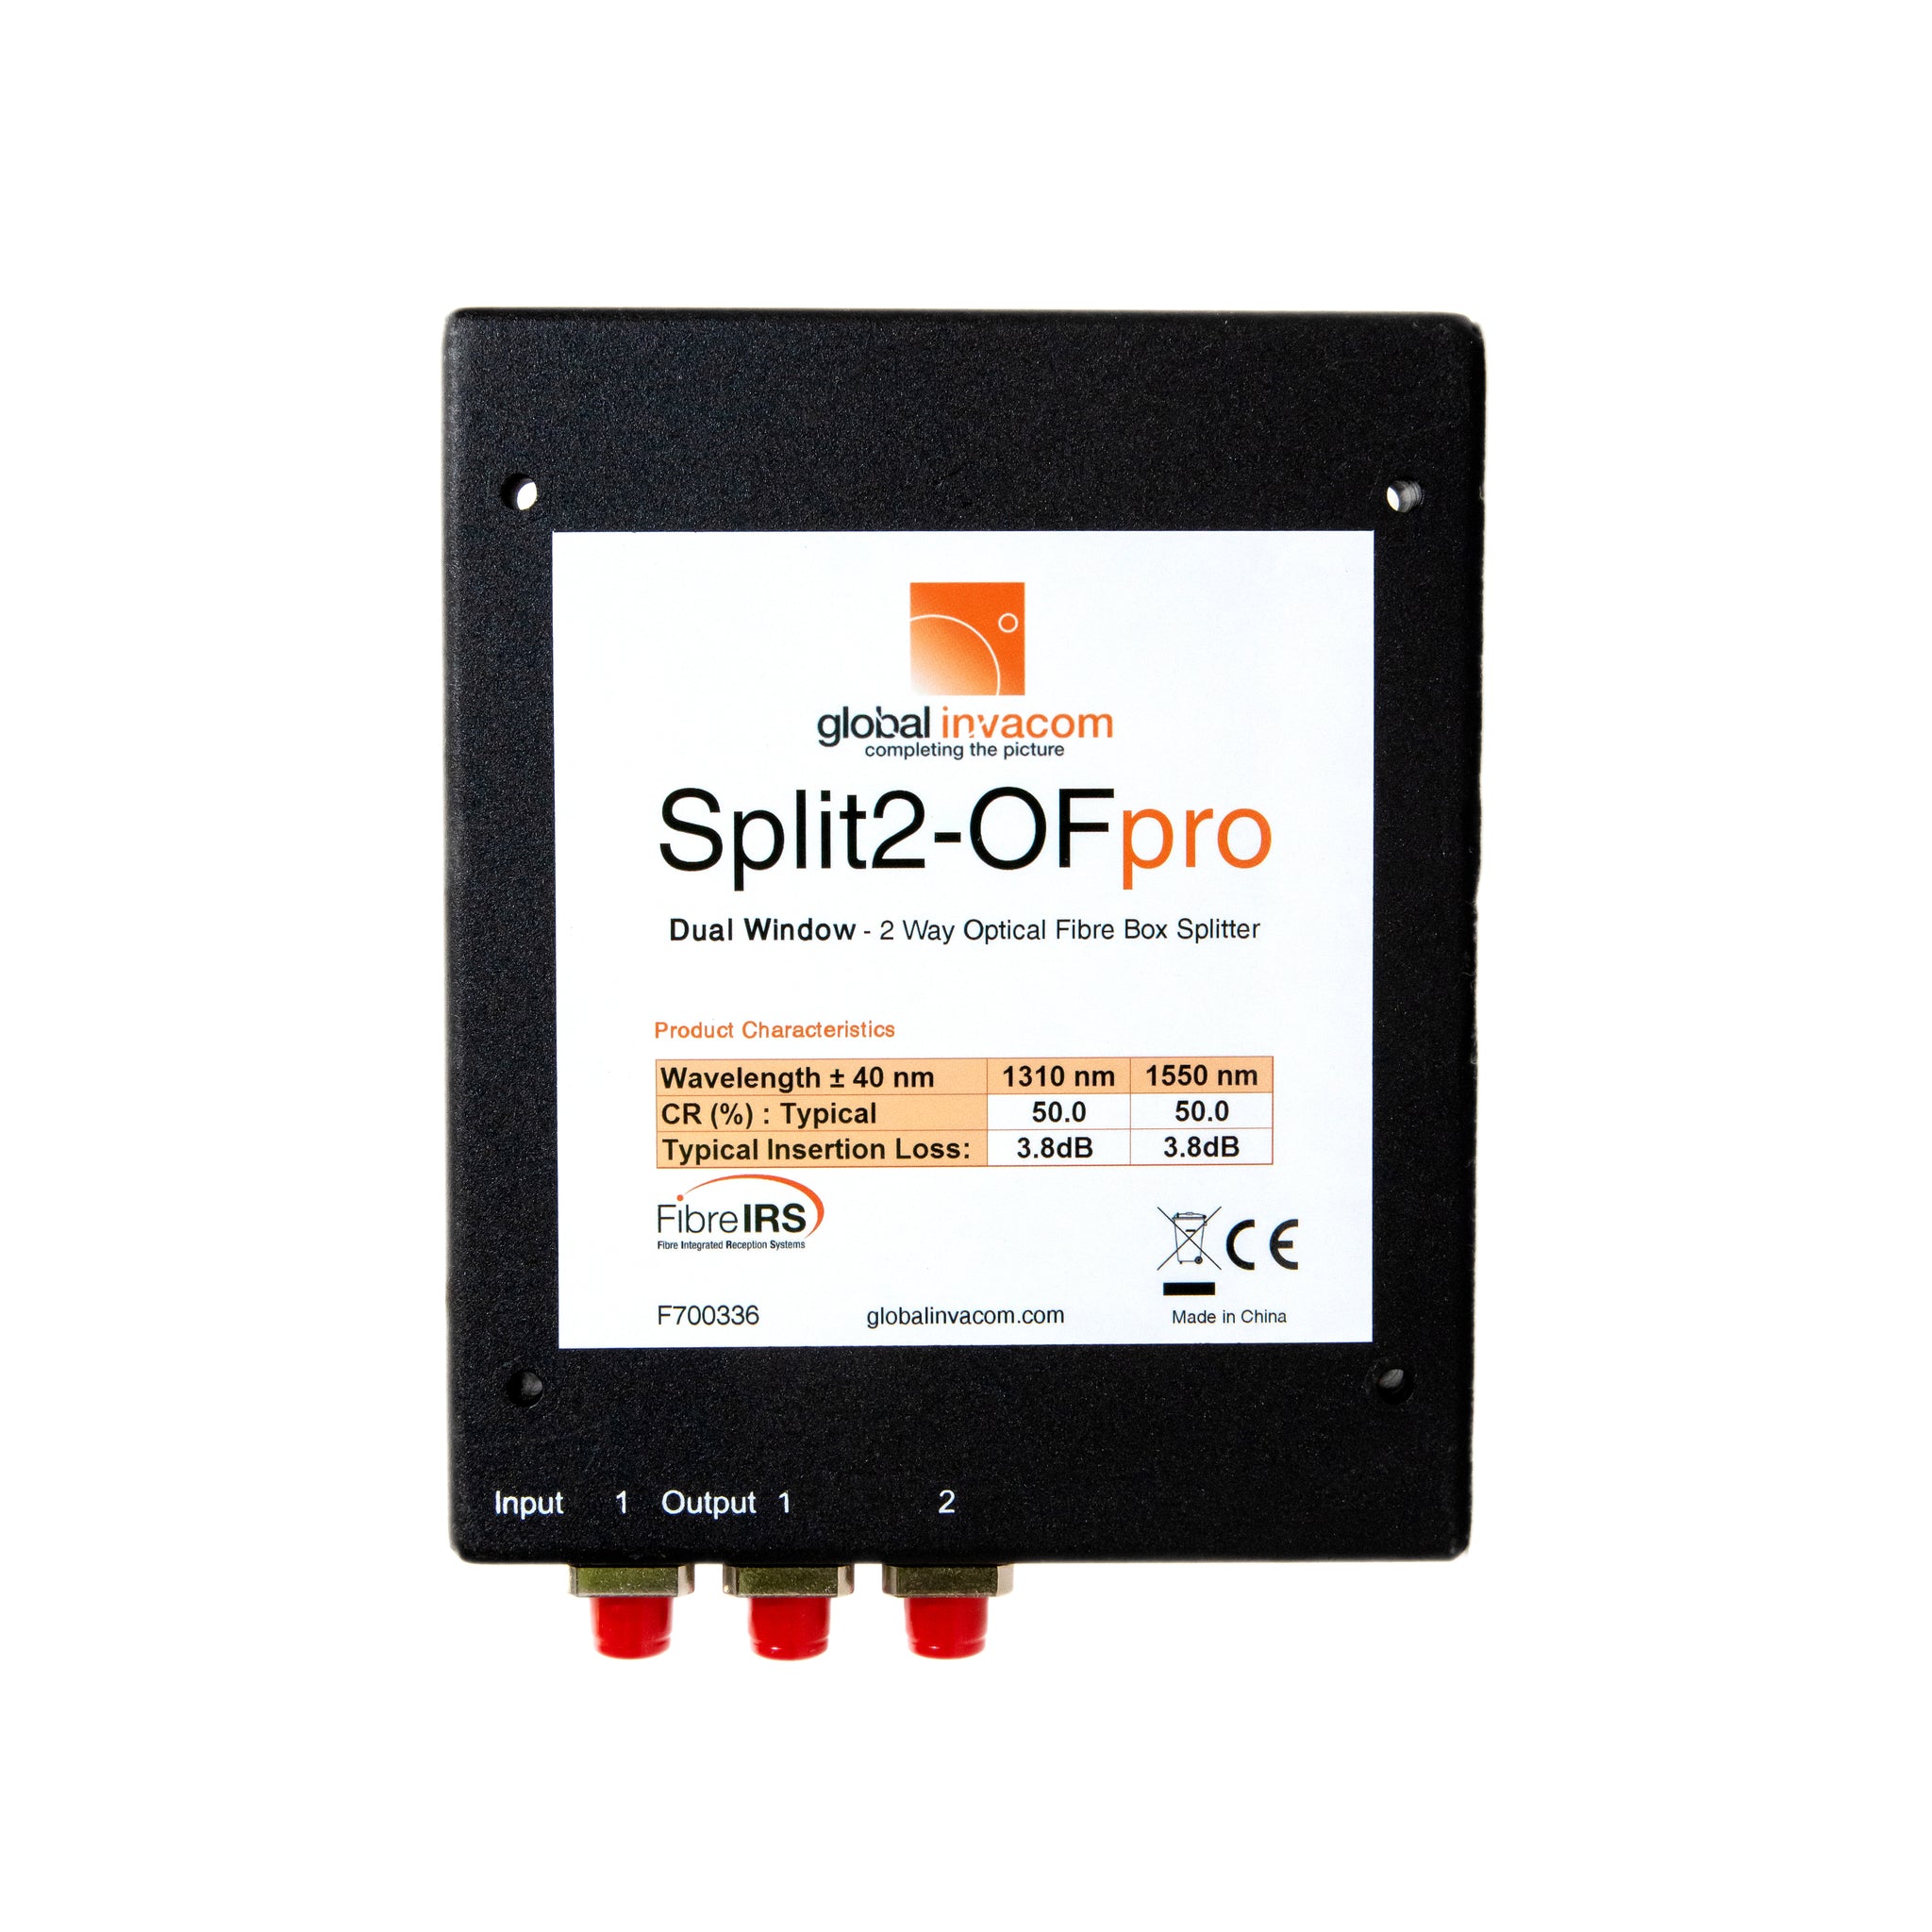 2 Way Optical Box Splitter - Split2-OFpro